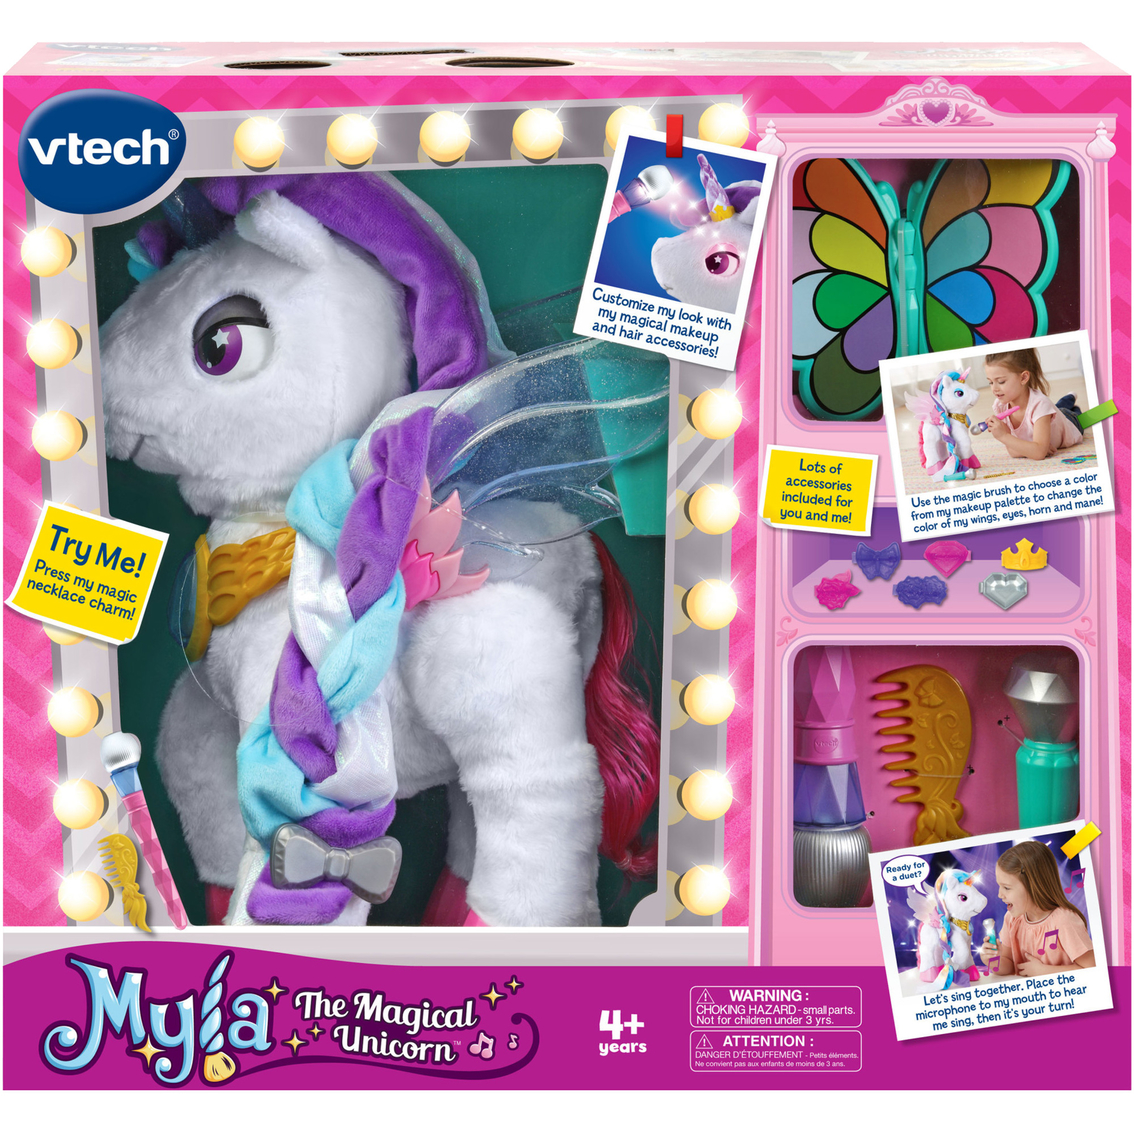 myla the magical unicorn video